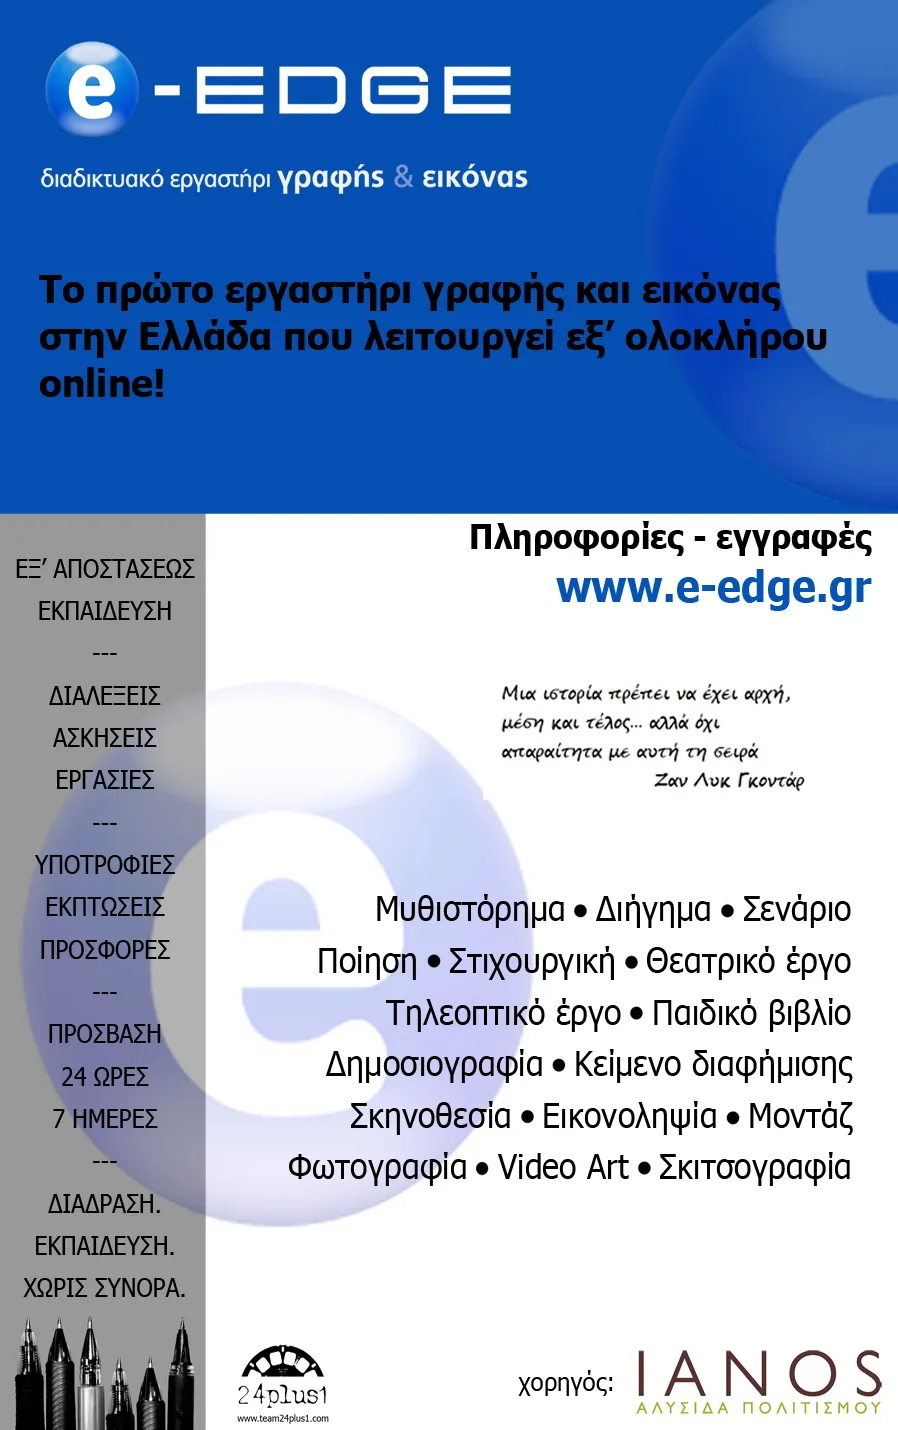 E-Edge.gr | Tο πρώτο εργαστήρι γραφής και εικόνας είναι online!